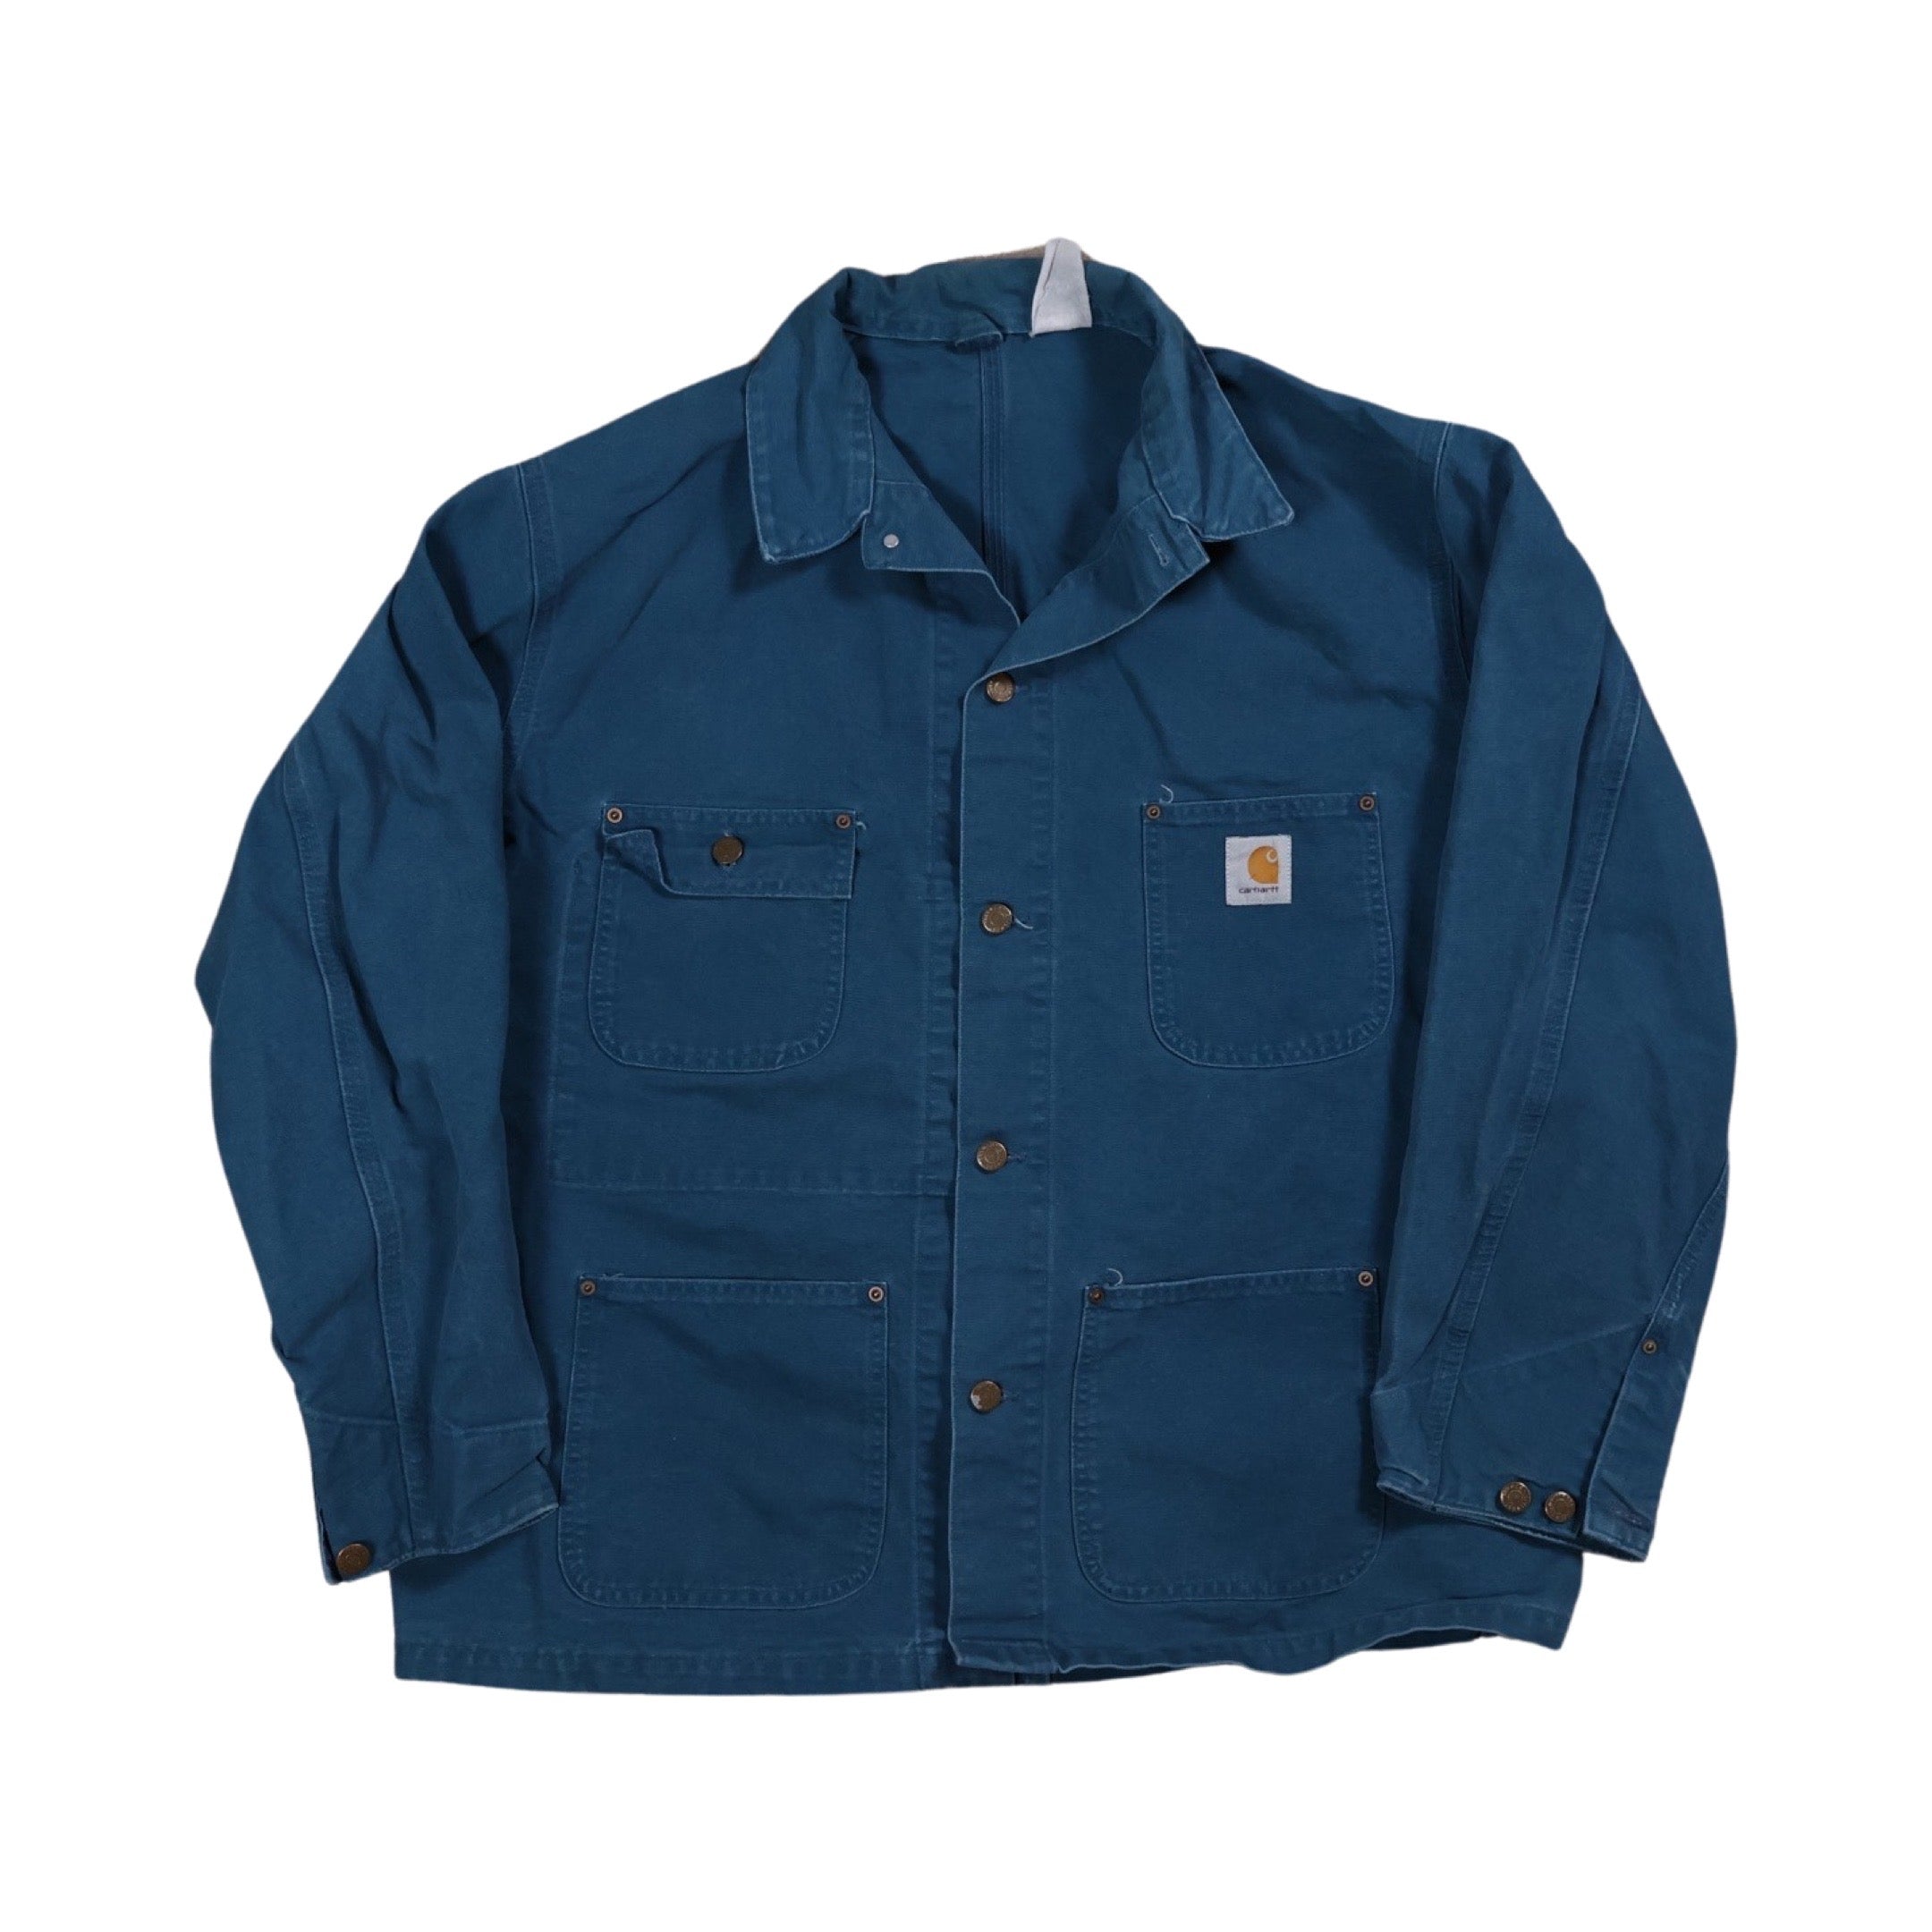 Teal Carhartt 90s Chore Jacket (XL)